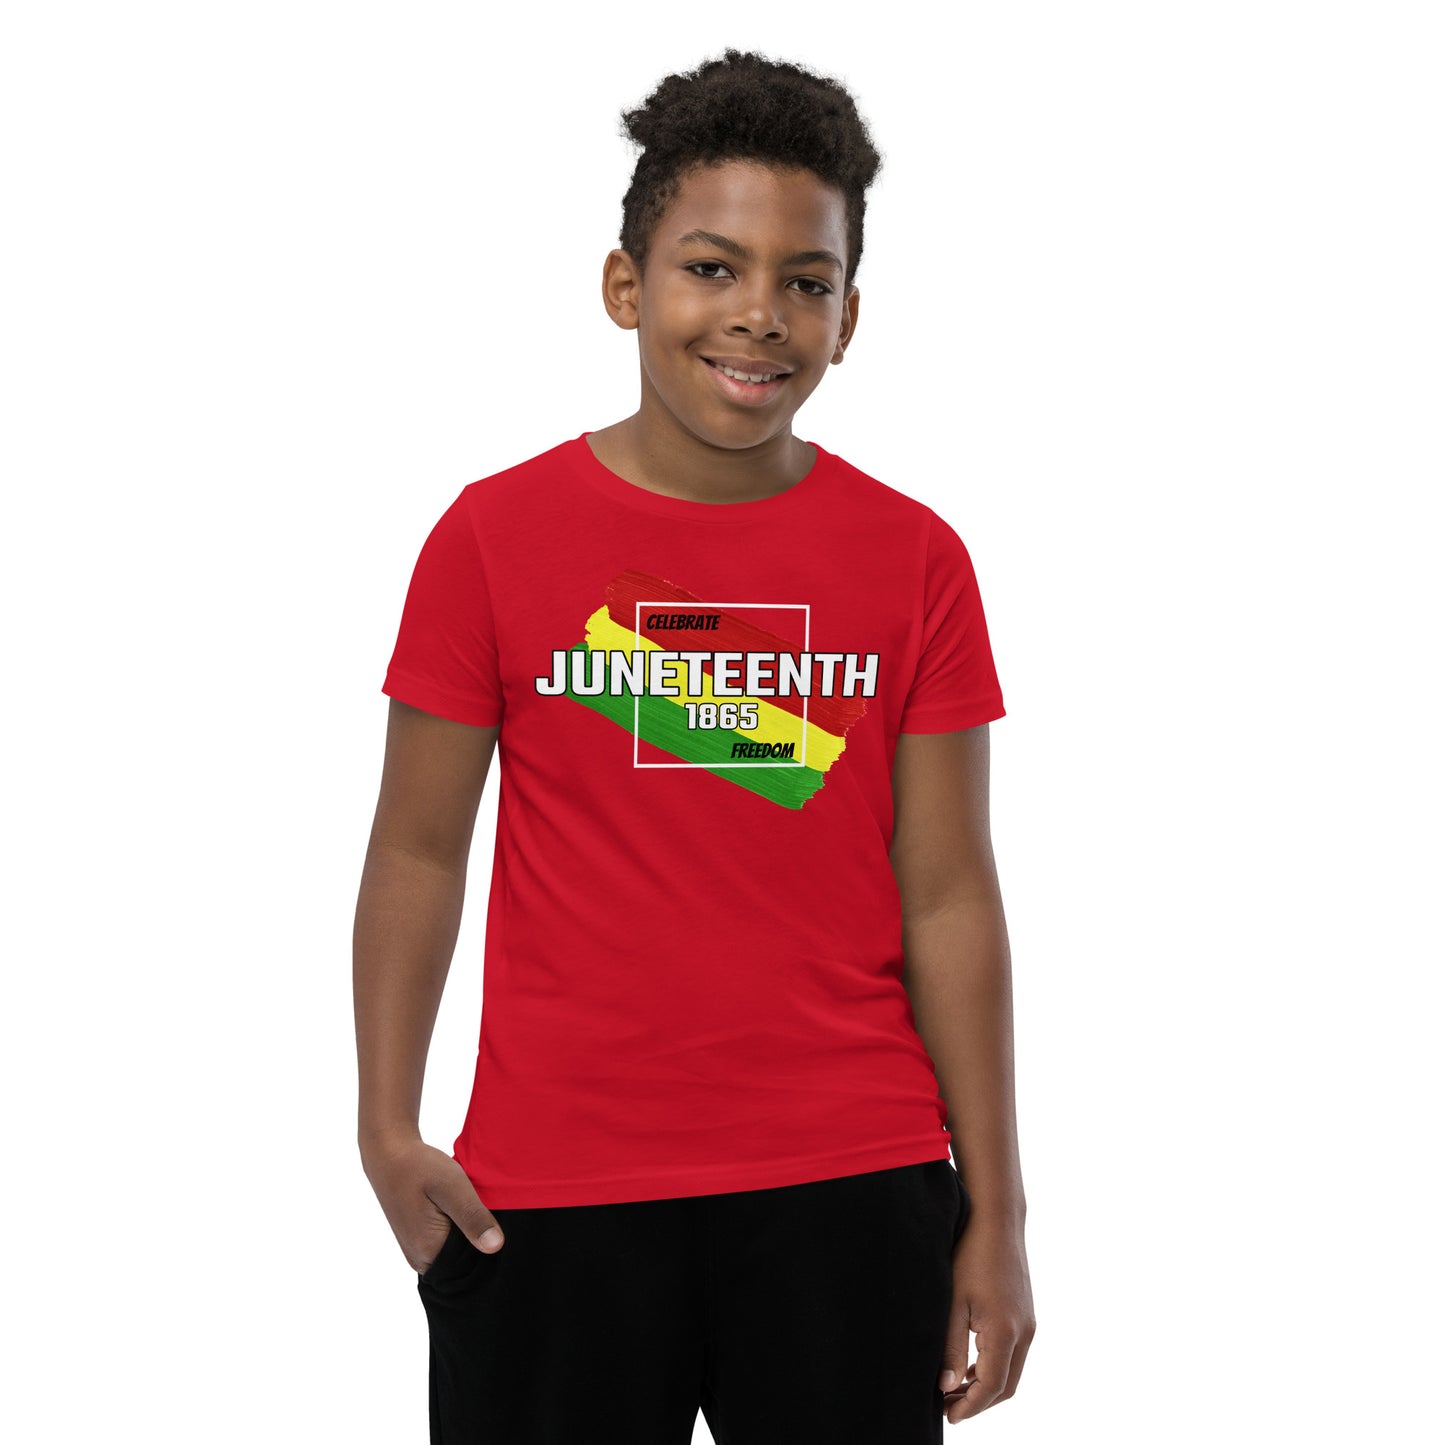 Youth "Juneteenth" T-Shirt